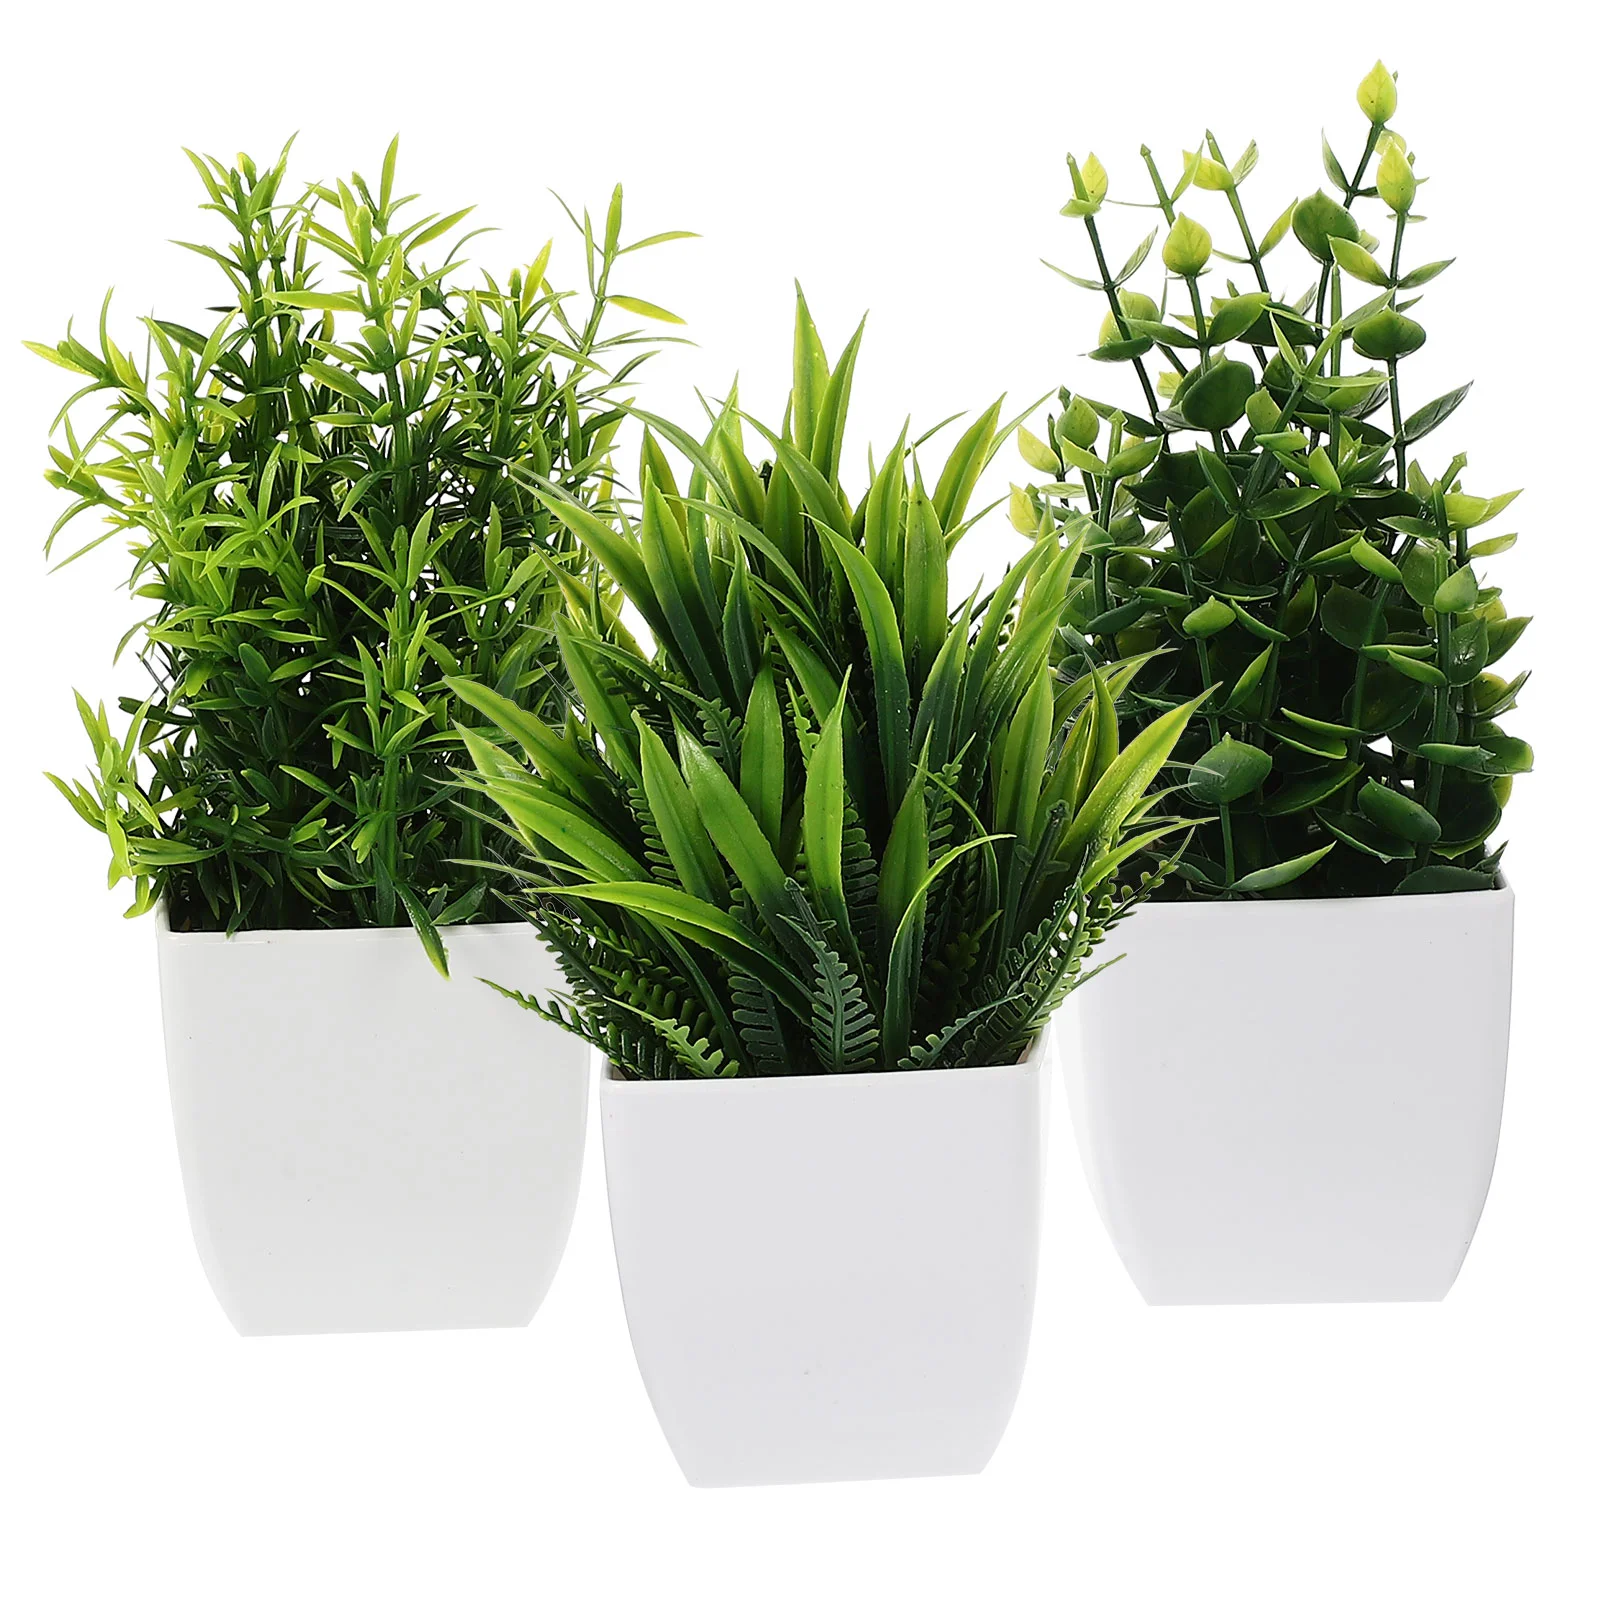 

Simulated Potted Plant Home Bonsai Decor Fake Desktop Adornments Faux Plants Indoor Flower Pots